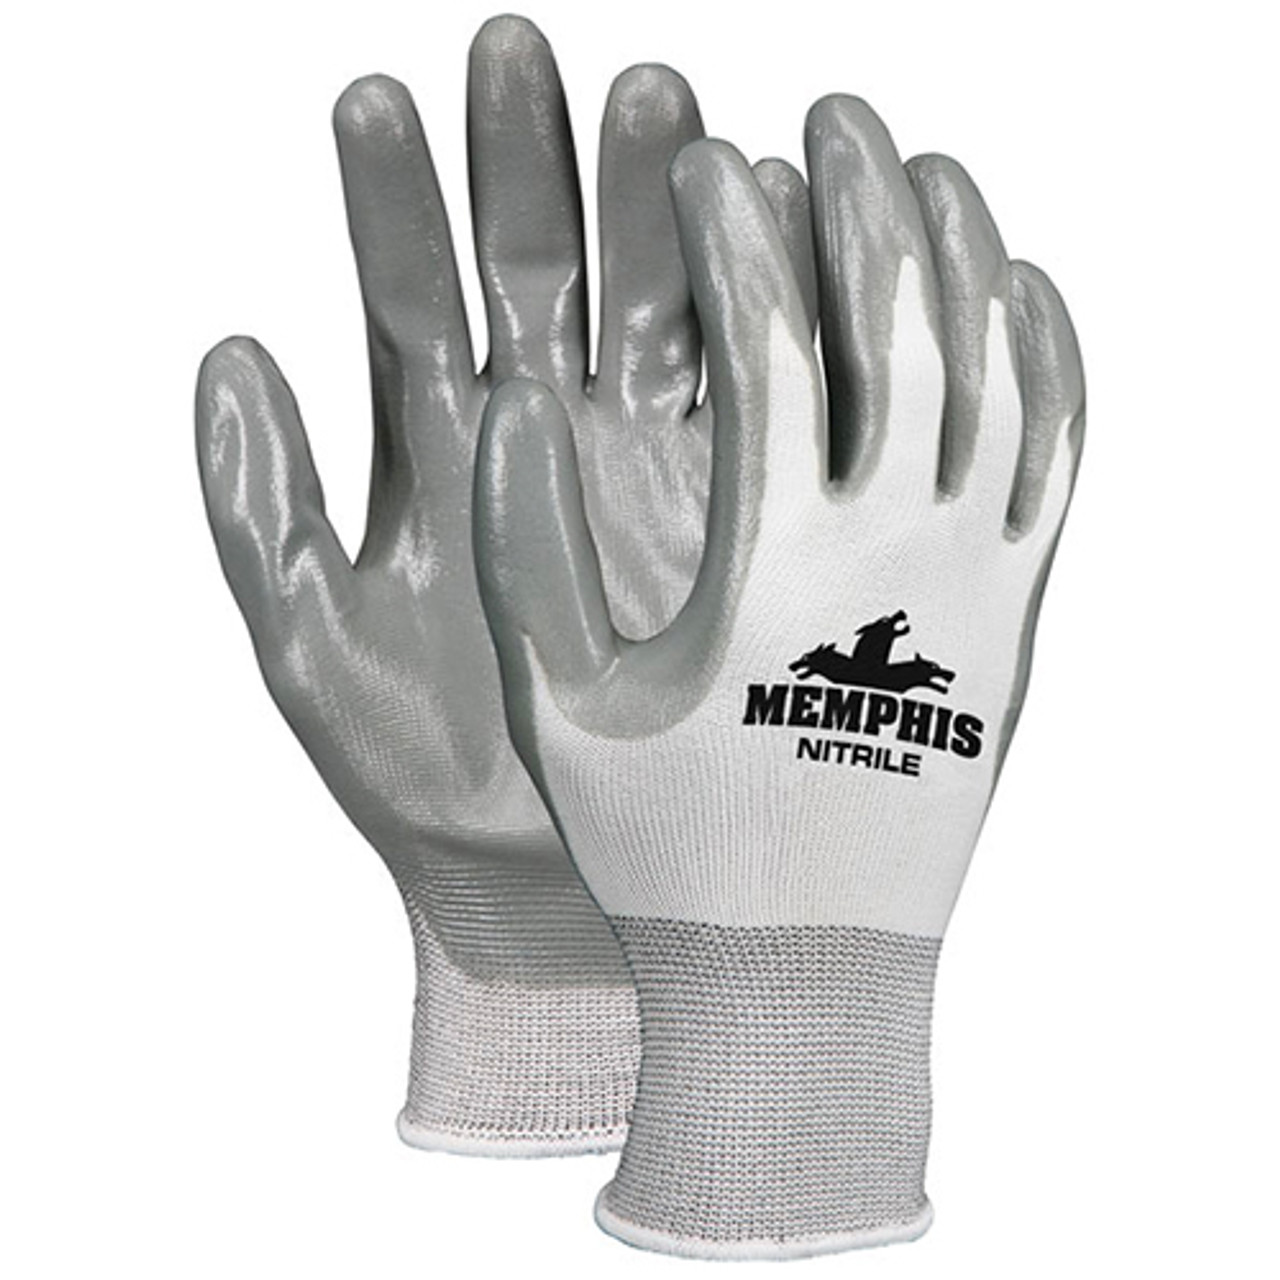 Nitrile Coated Skin Gloves Pair